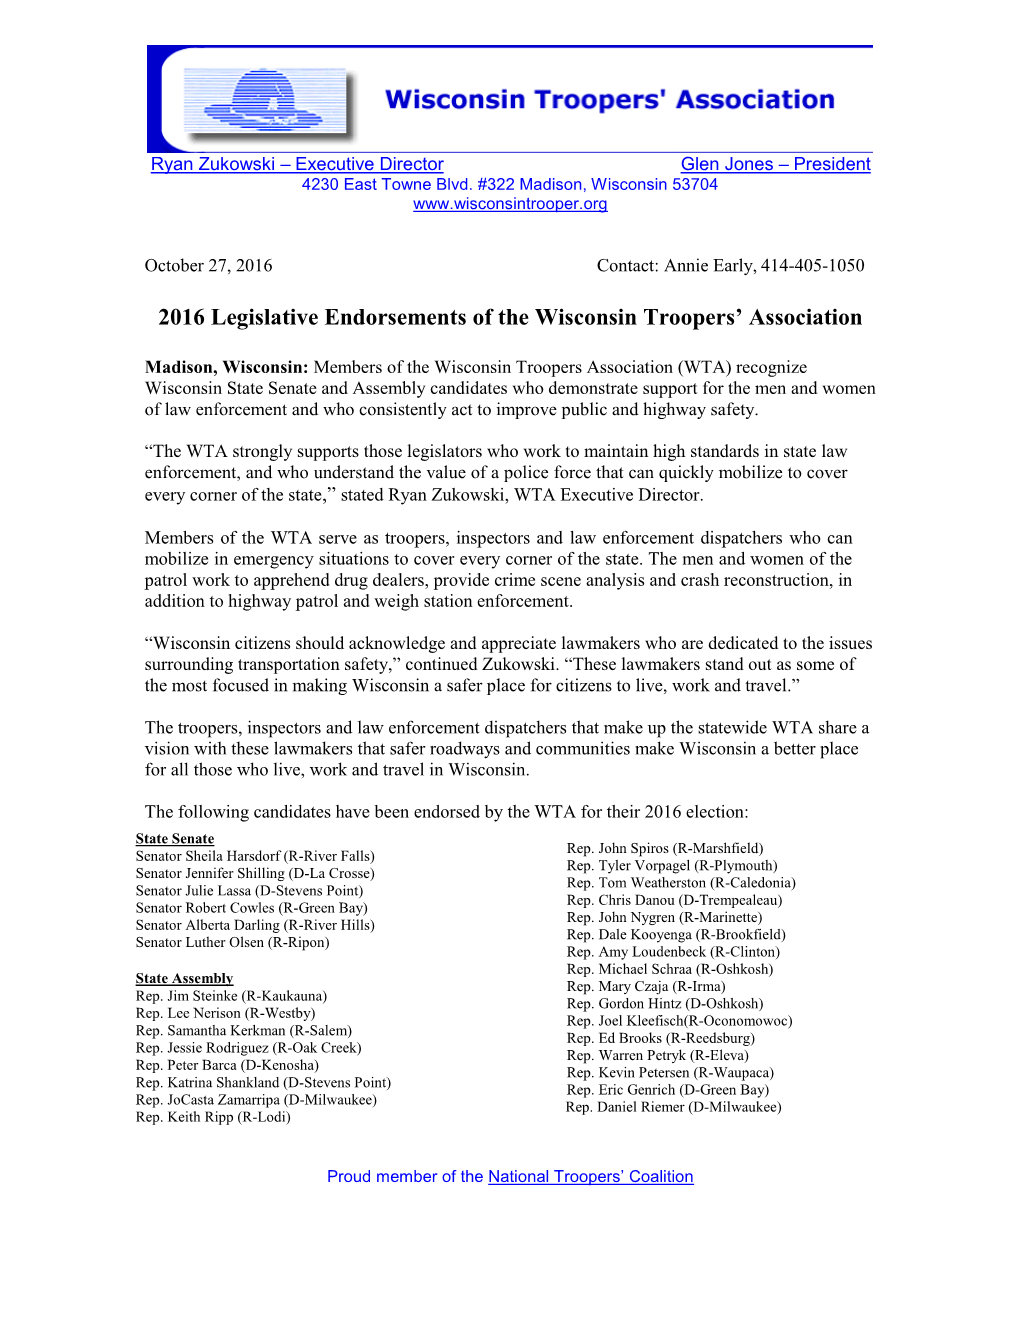 2016 Legislative Endorsements of the Wisconsin Troopers' Association